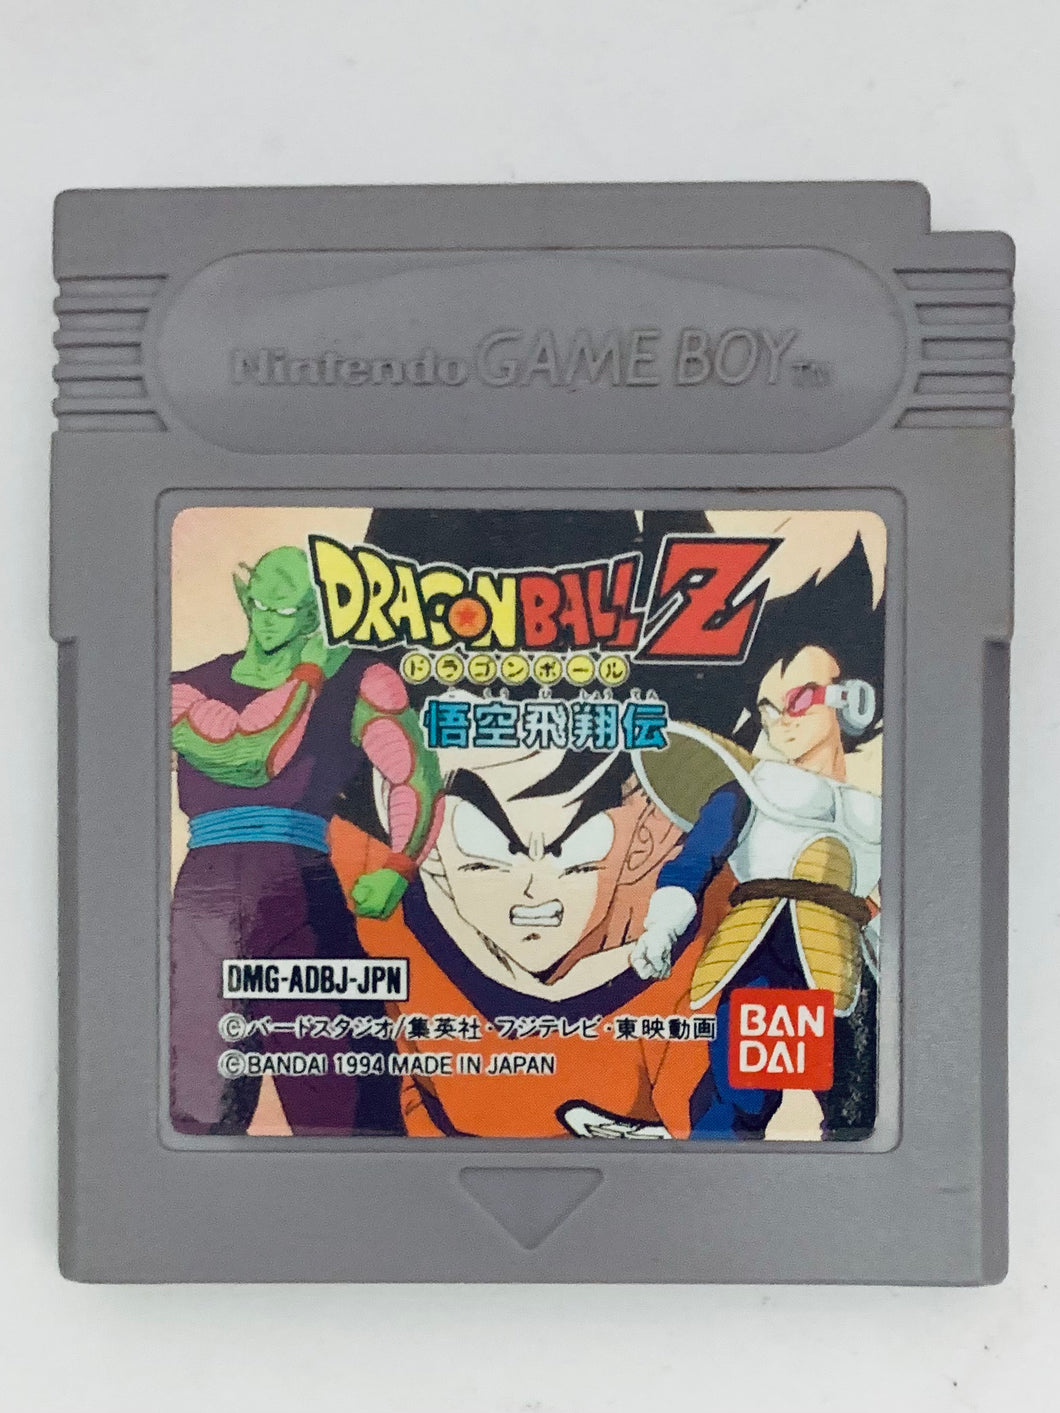 Dragon Ball Z: Goku Hishouden - GameBoy - Game Boy - Pocket - GBC - GBA - JP - Cartridge (DMG-ADBJ-JPN)